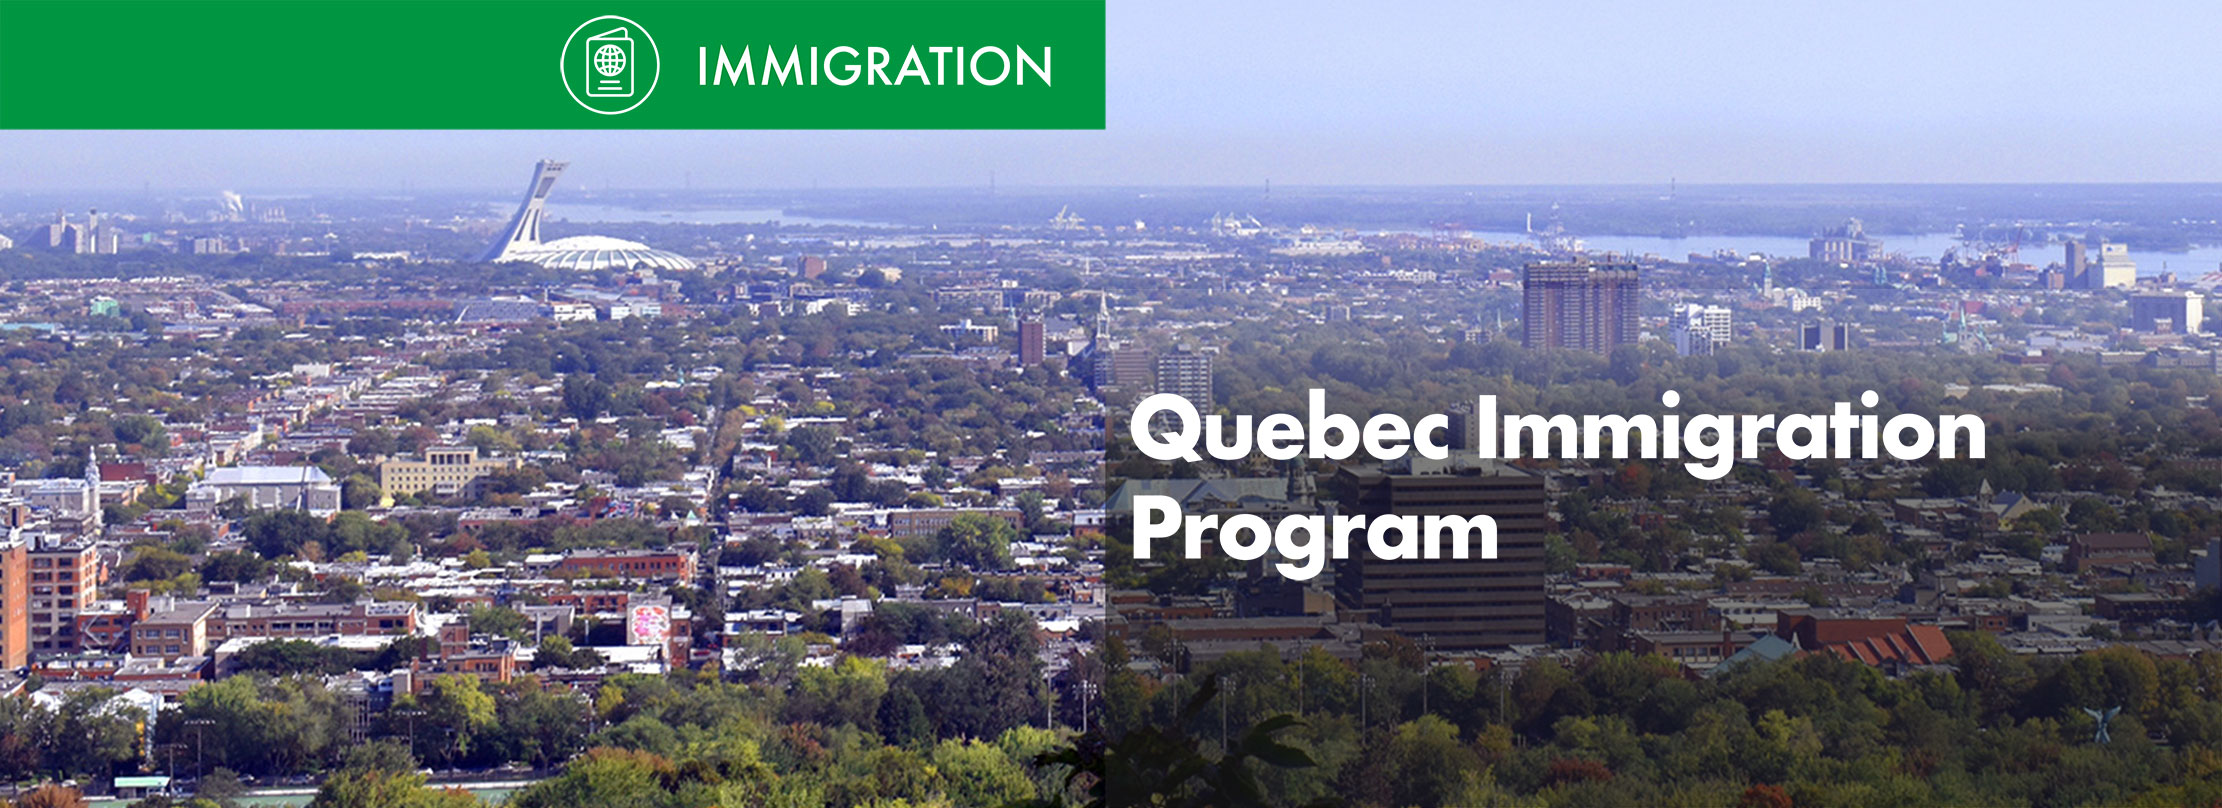 Quebec immigration programs